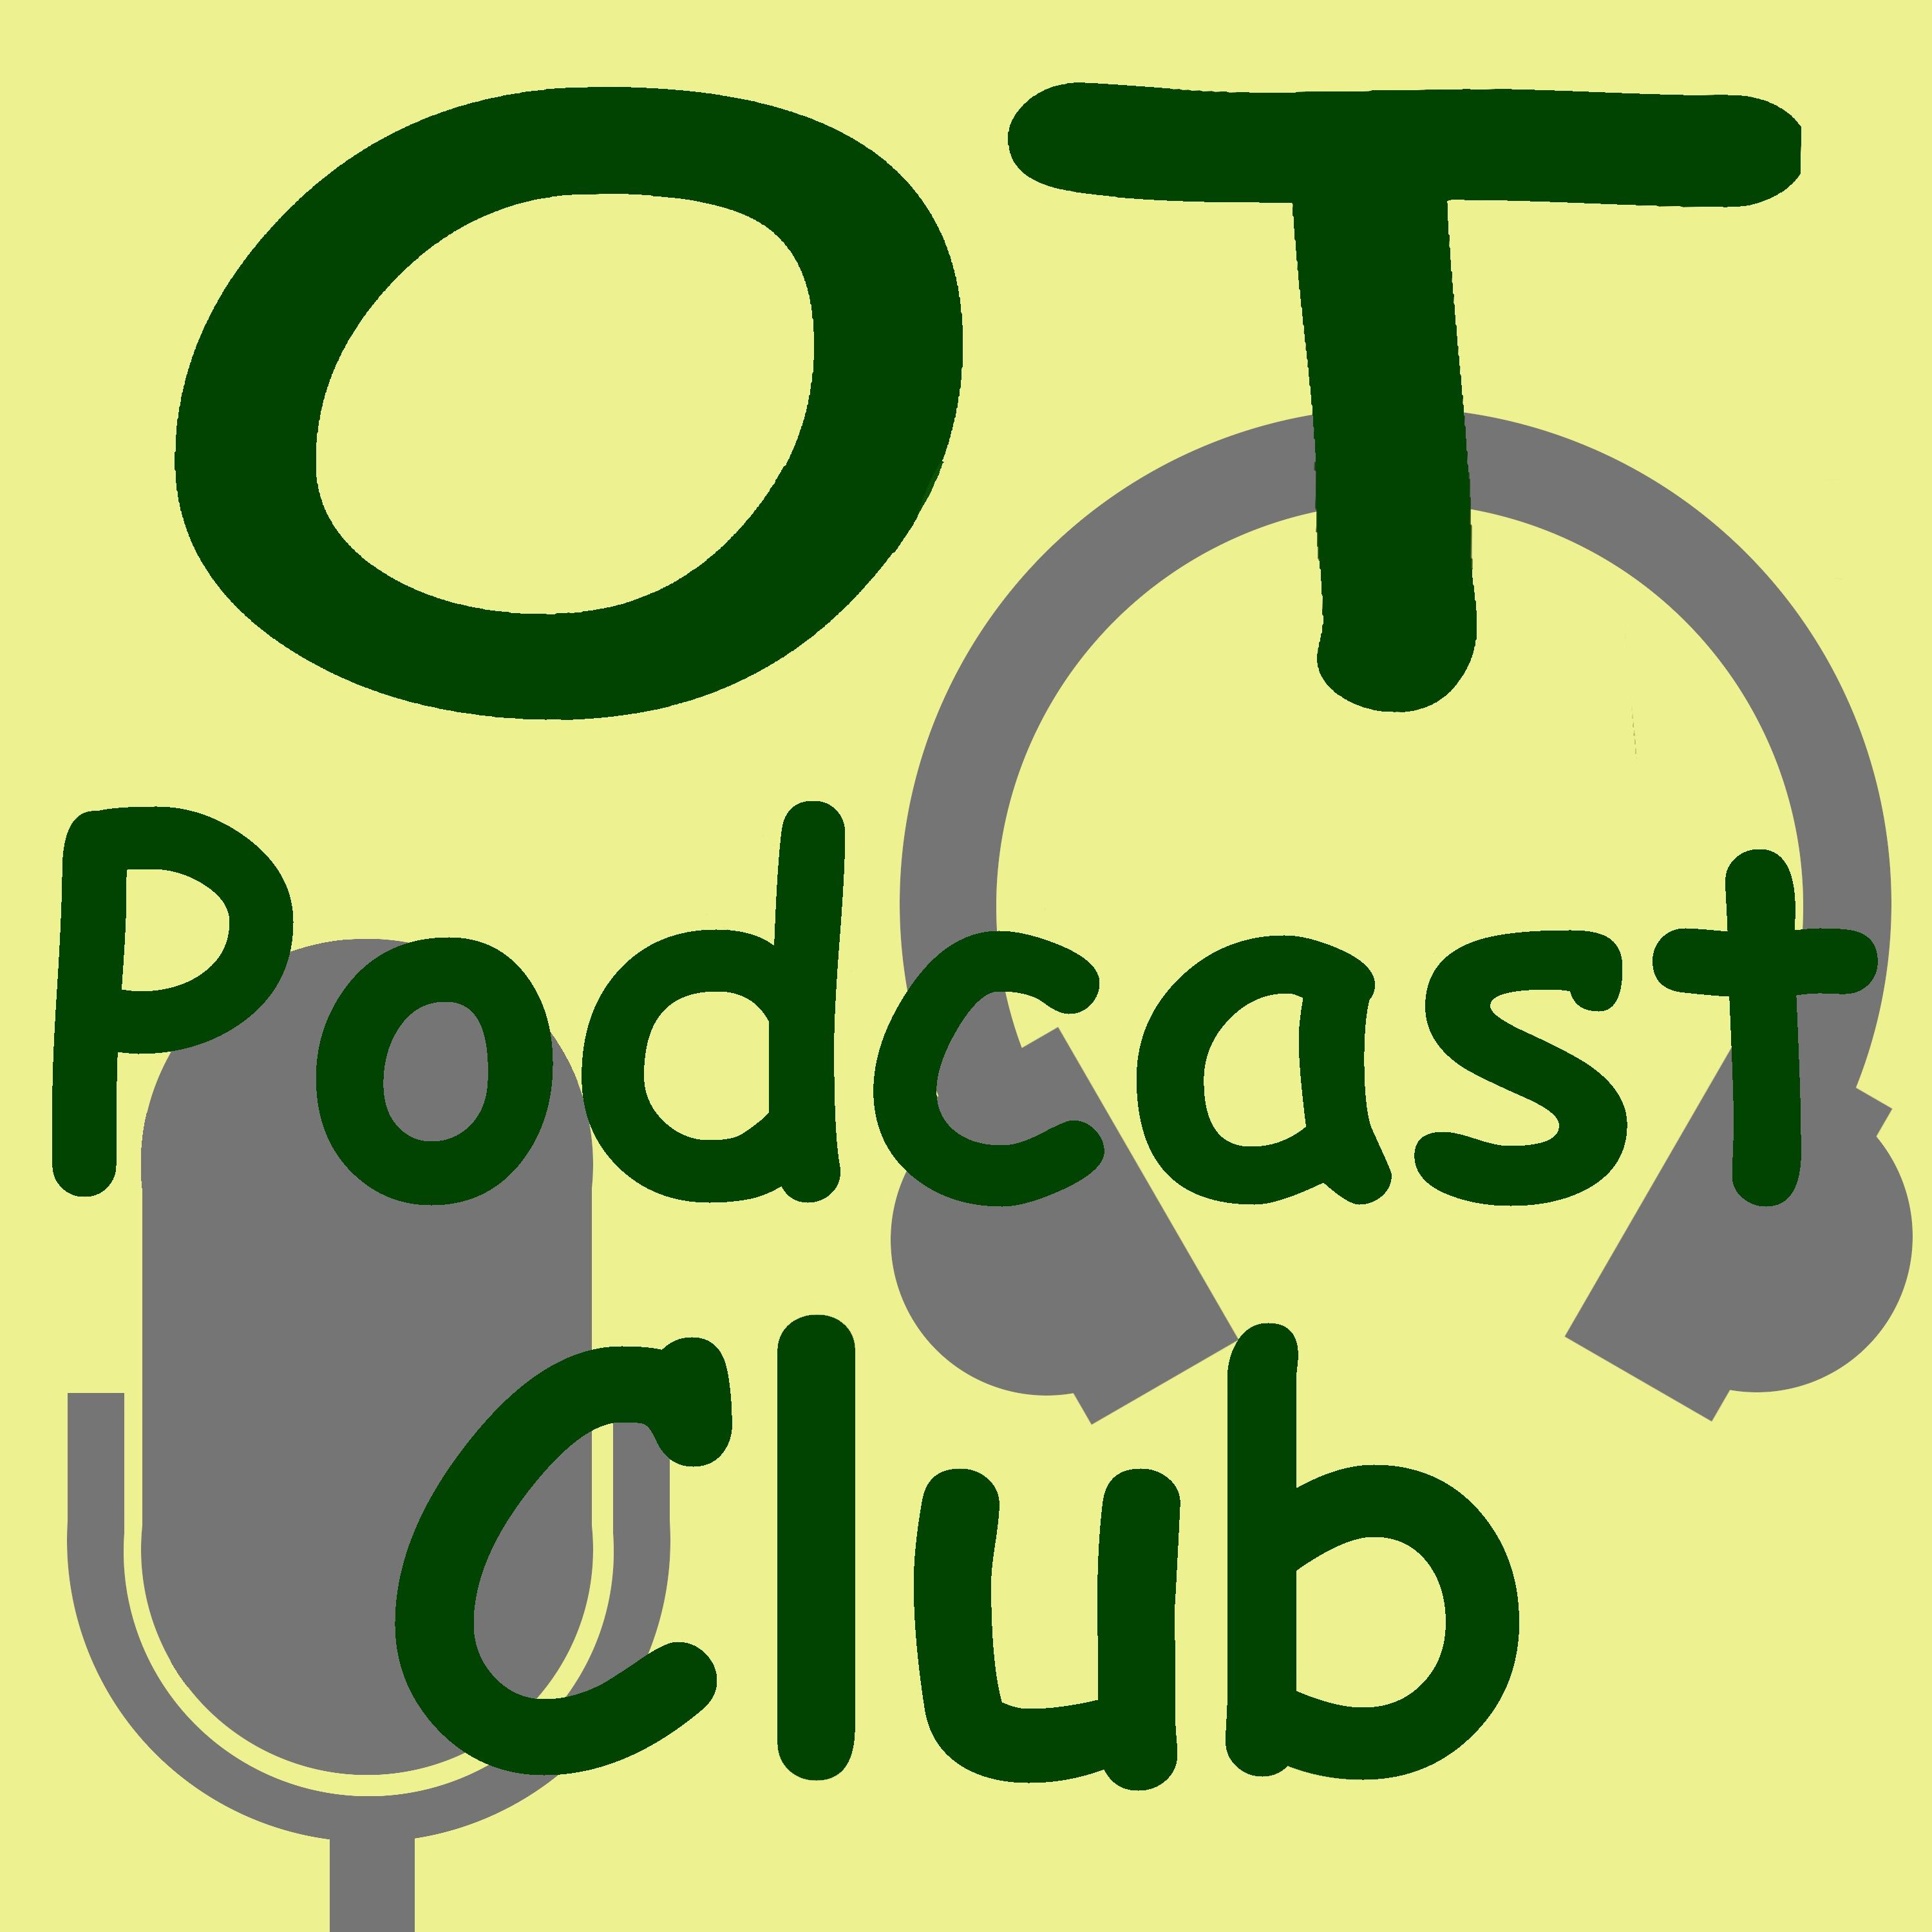 OT Podcast Club